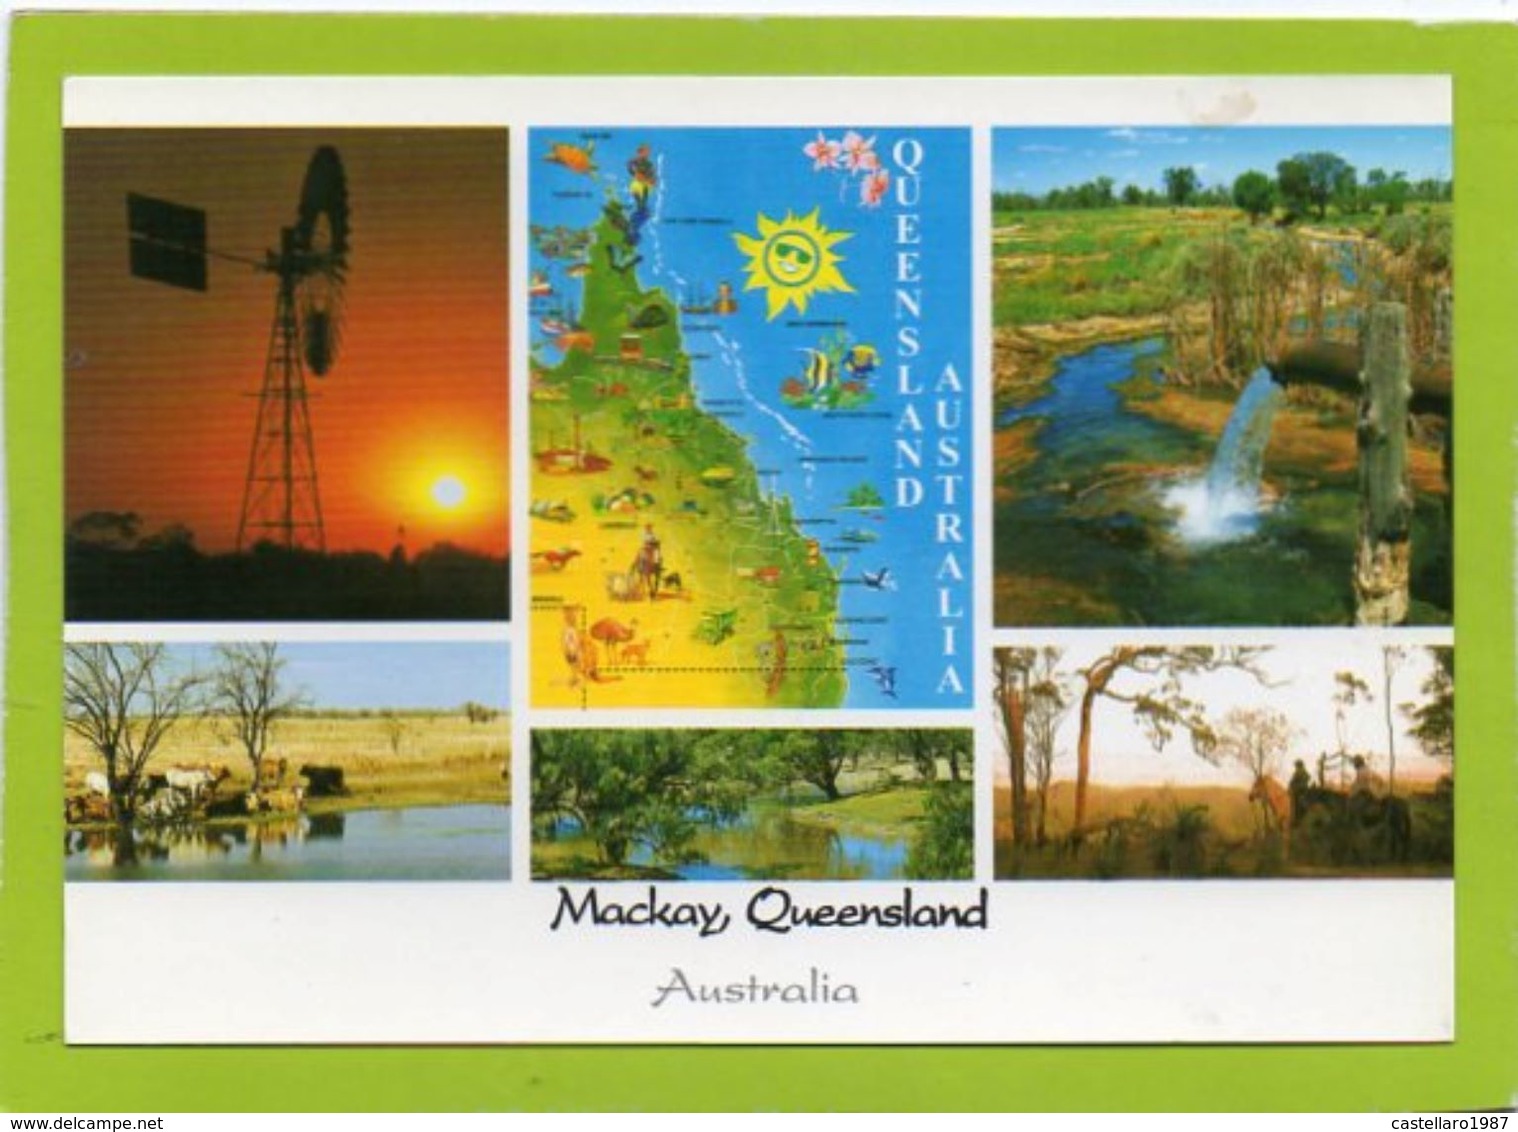 Mackay, Queensland, Australia - Mackay / Whitsundays